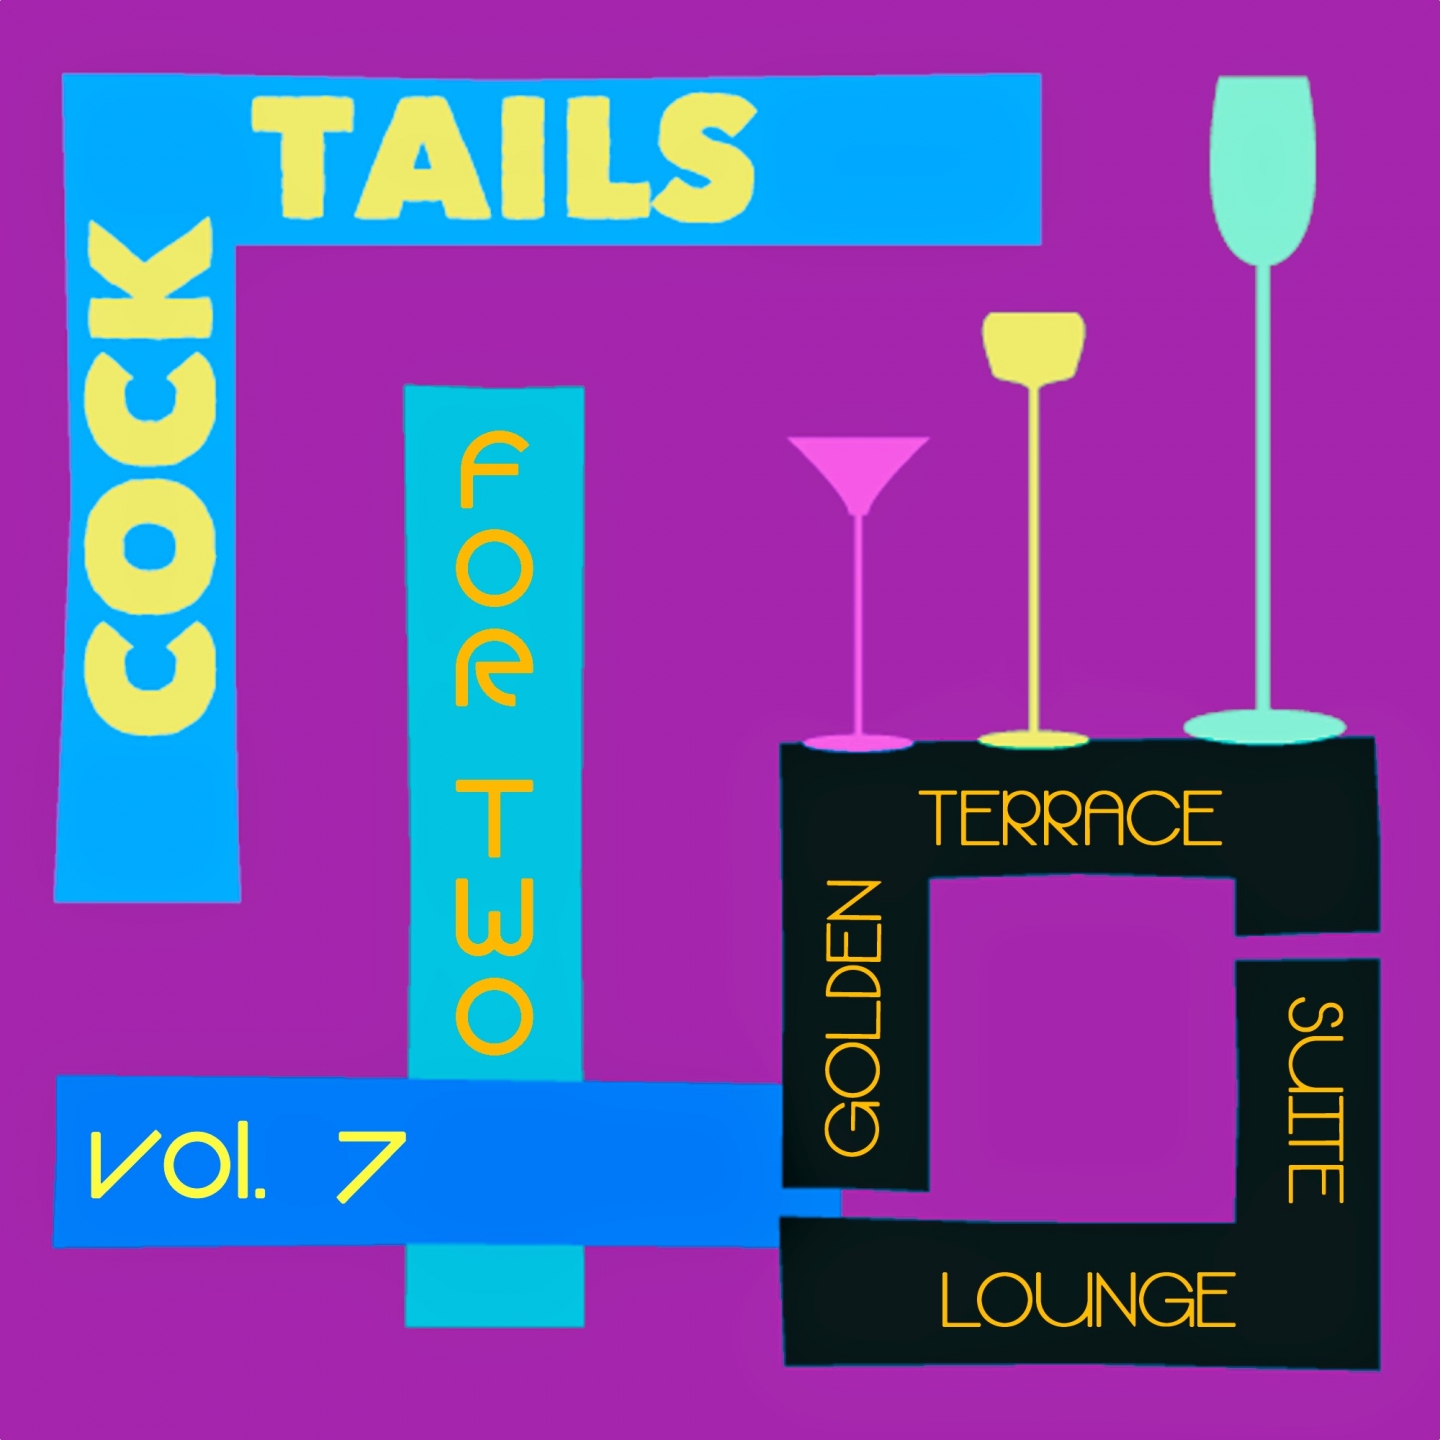 Cocktails for Two, Vol. 7 (Golden Terrace Suite Lounge)